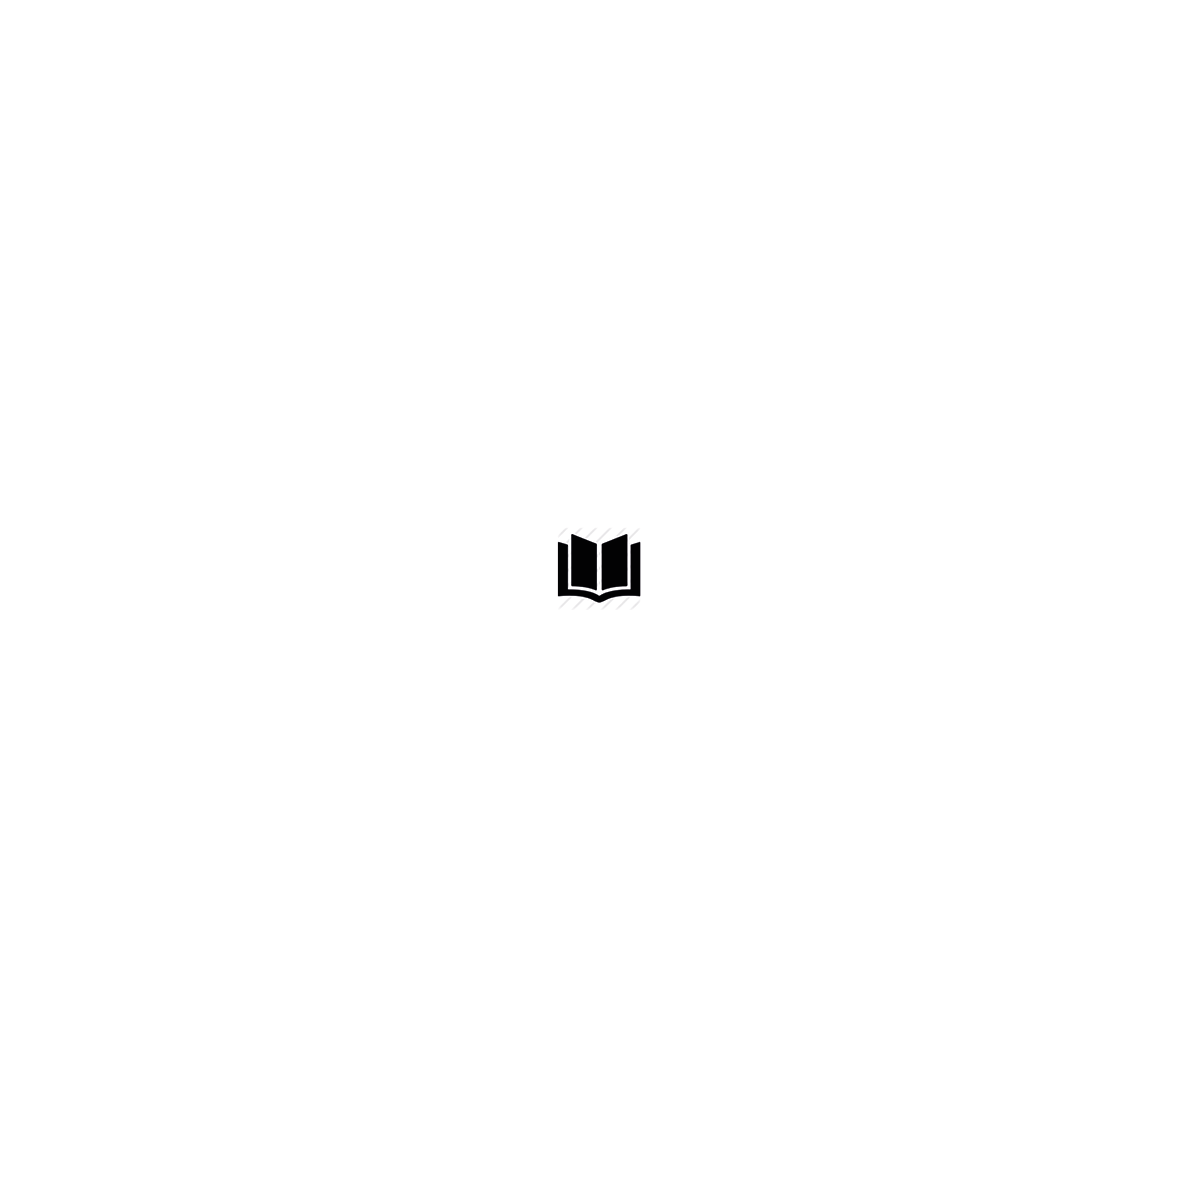 Karoline Eisenschenk alias Katelyn Edwards